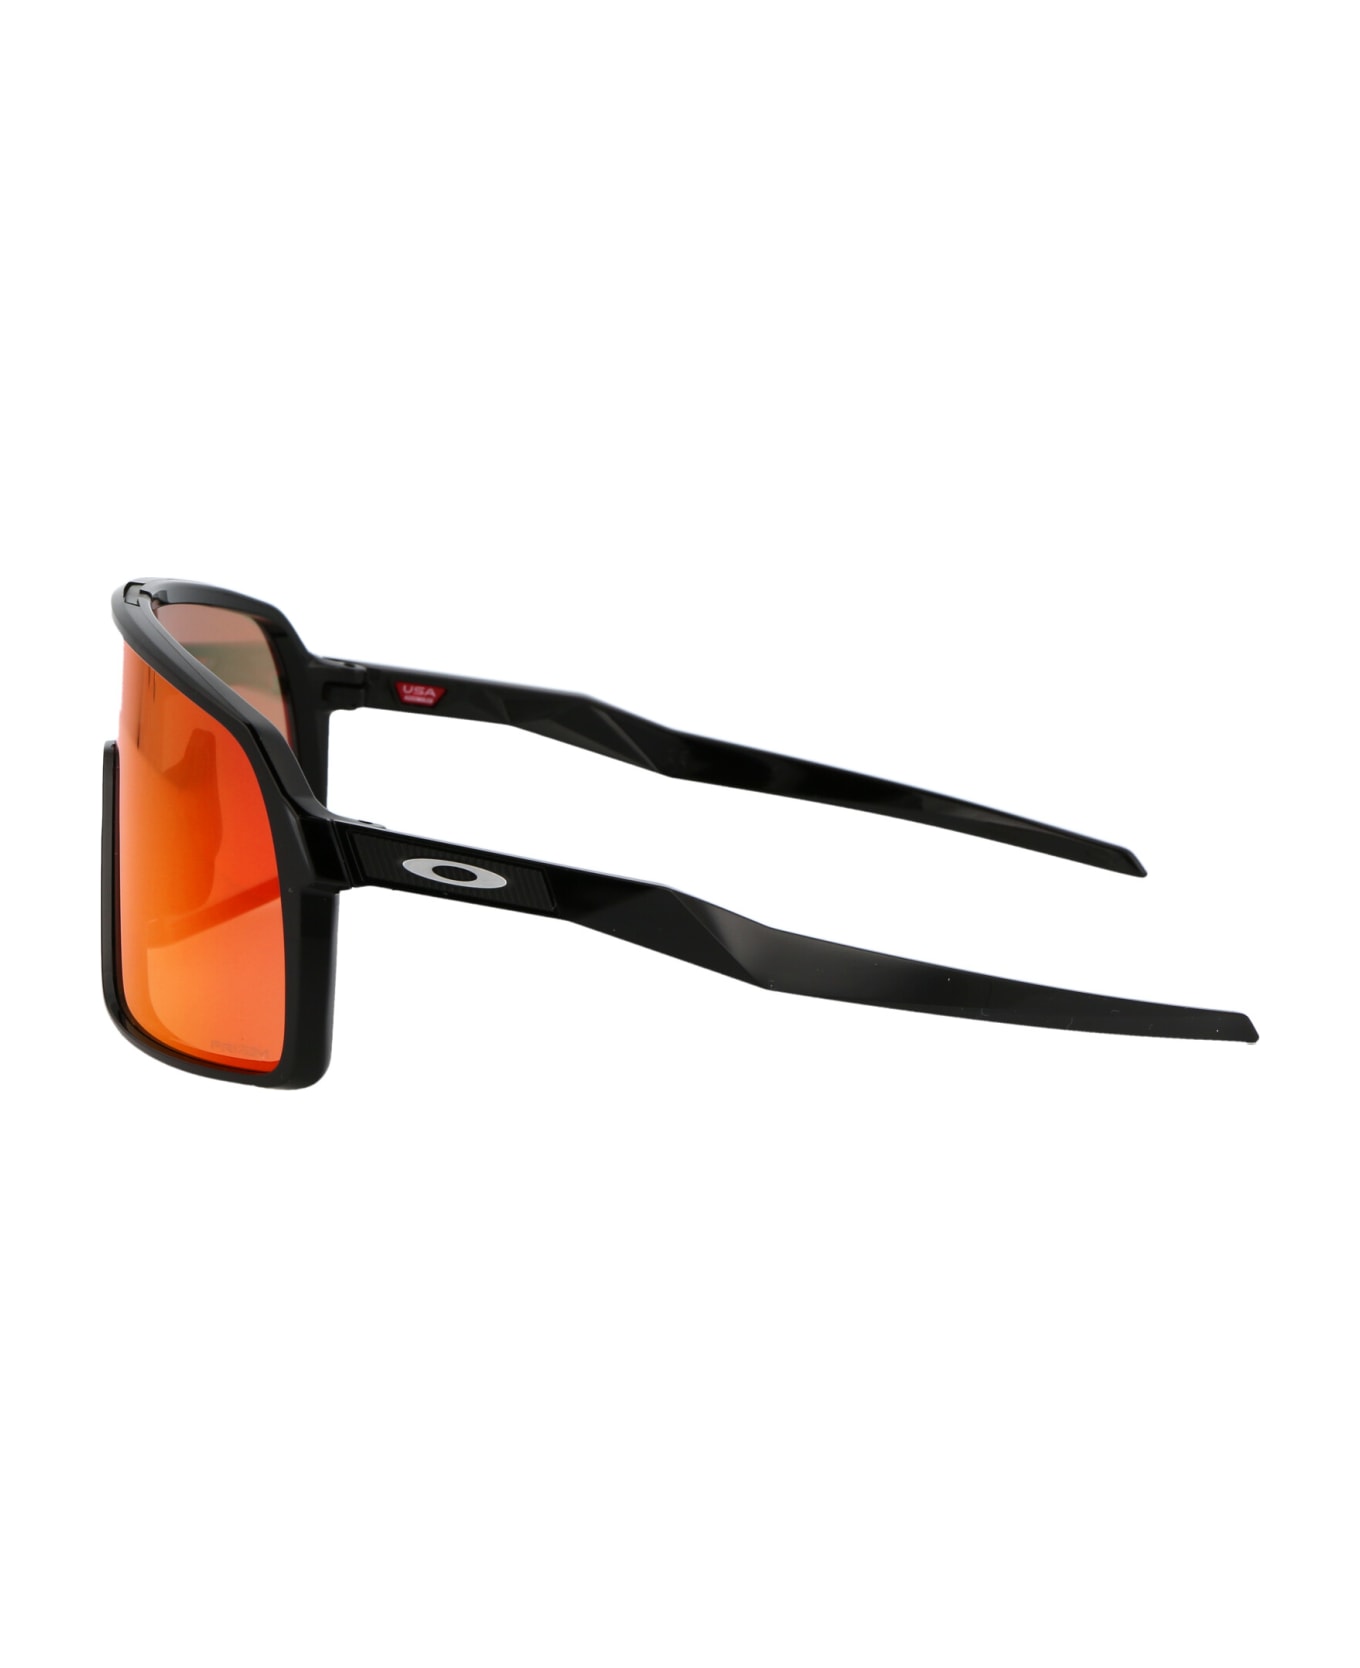 Oakley Sutro Sunglasses サングラス